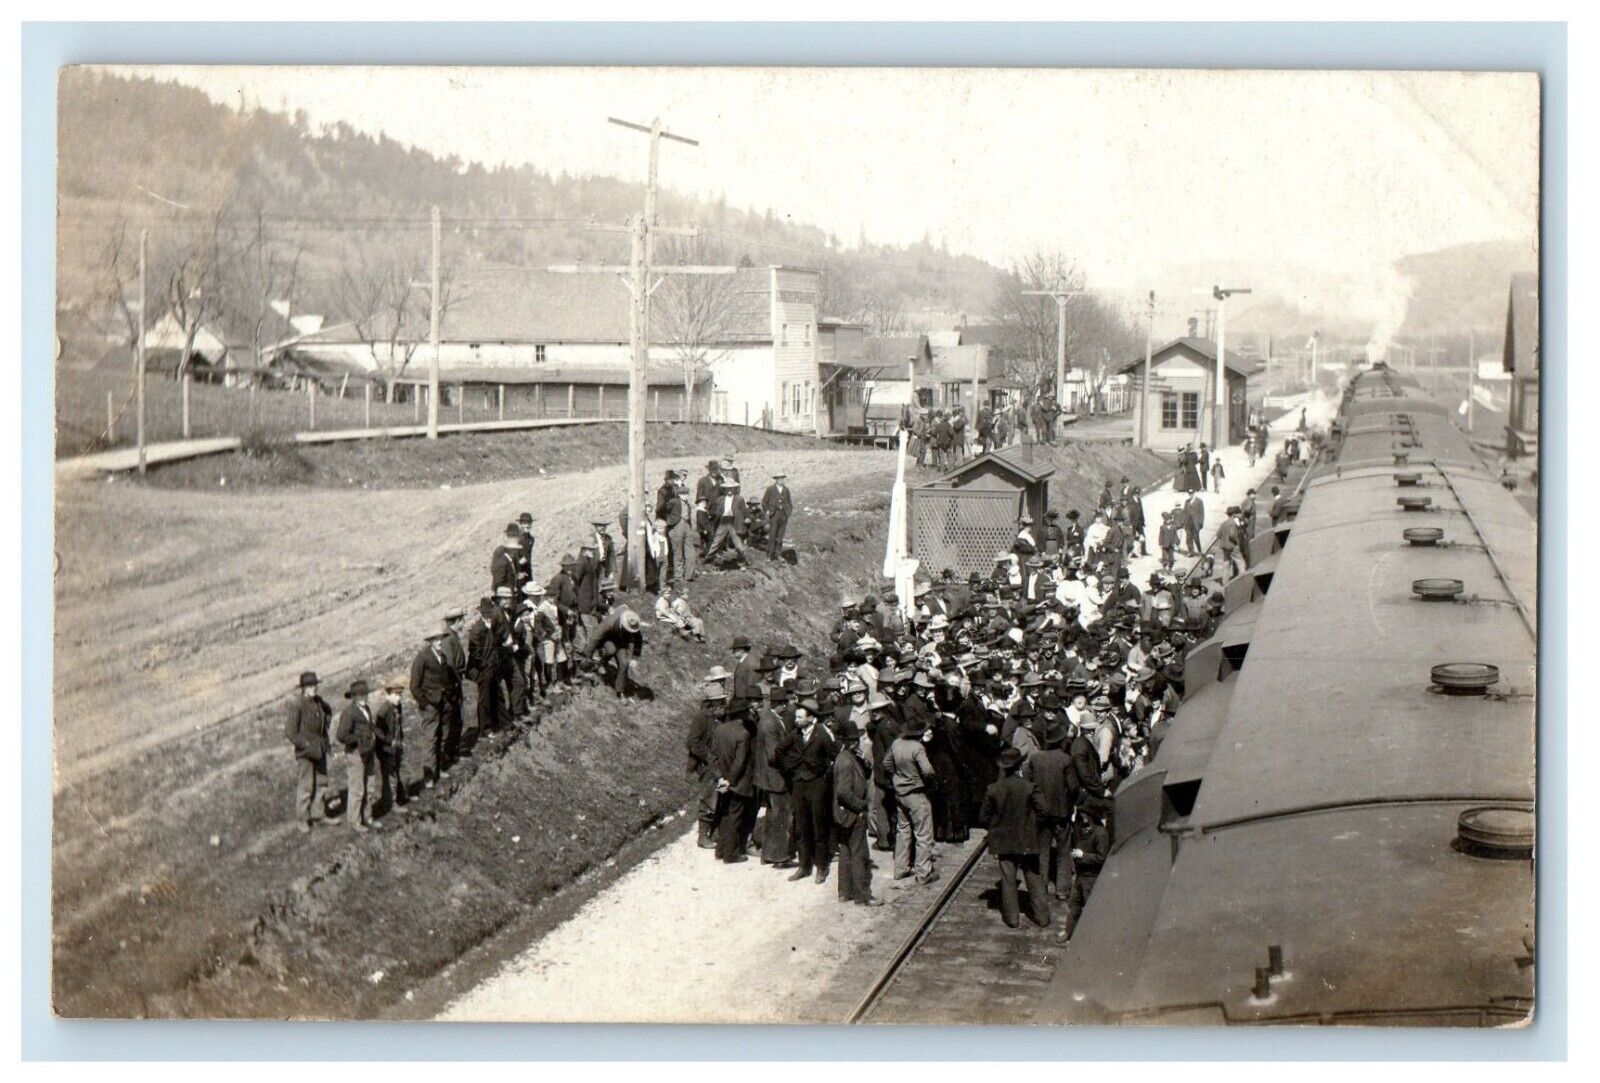 c1910 Depot Train Station Large Crowd Locomotive RPPC Photo Postcard